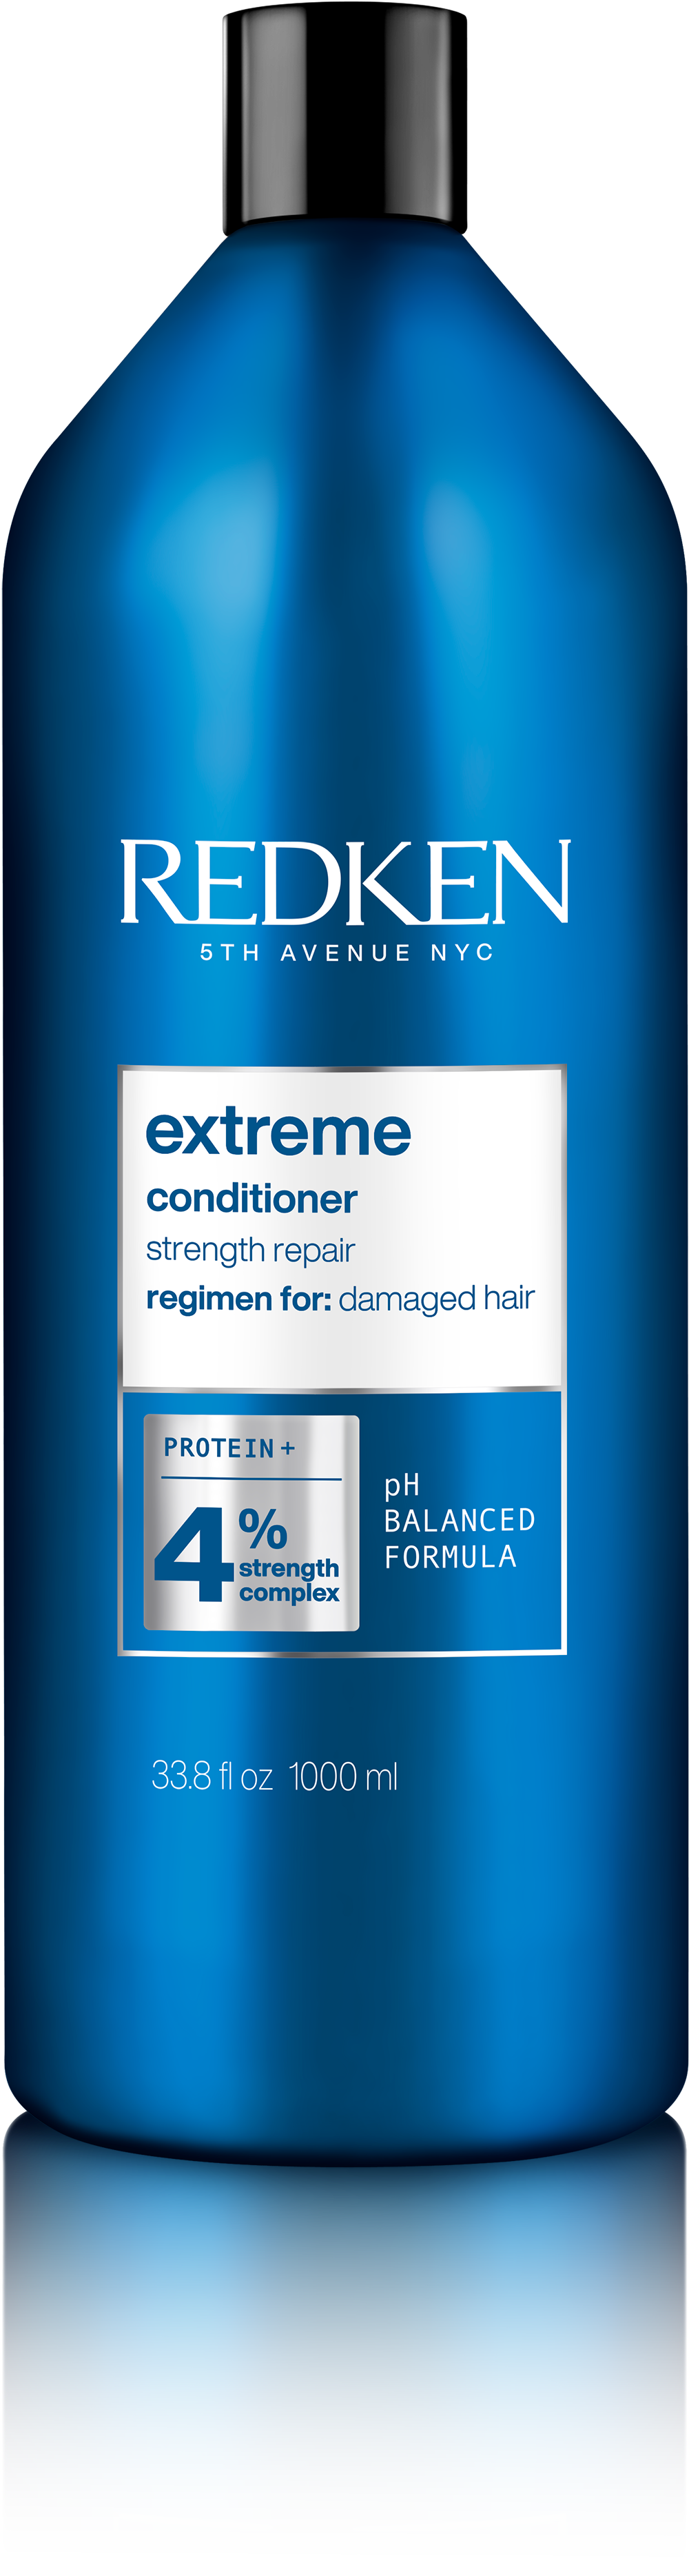 Redken Extreme Strengthening Shampoo *NEW* - 1 litre - ProCare Outlet by Redken